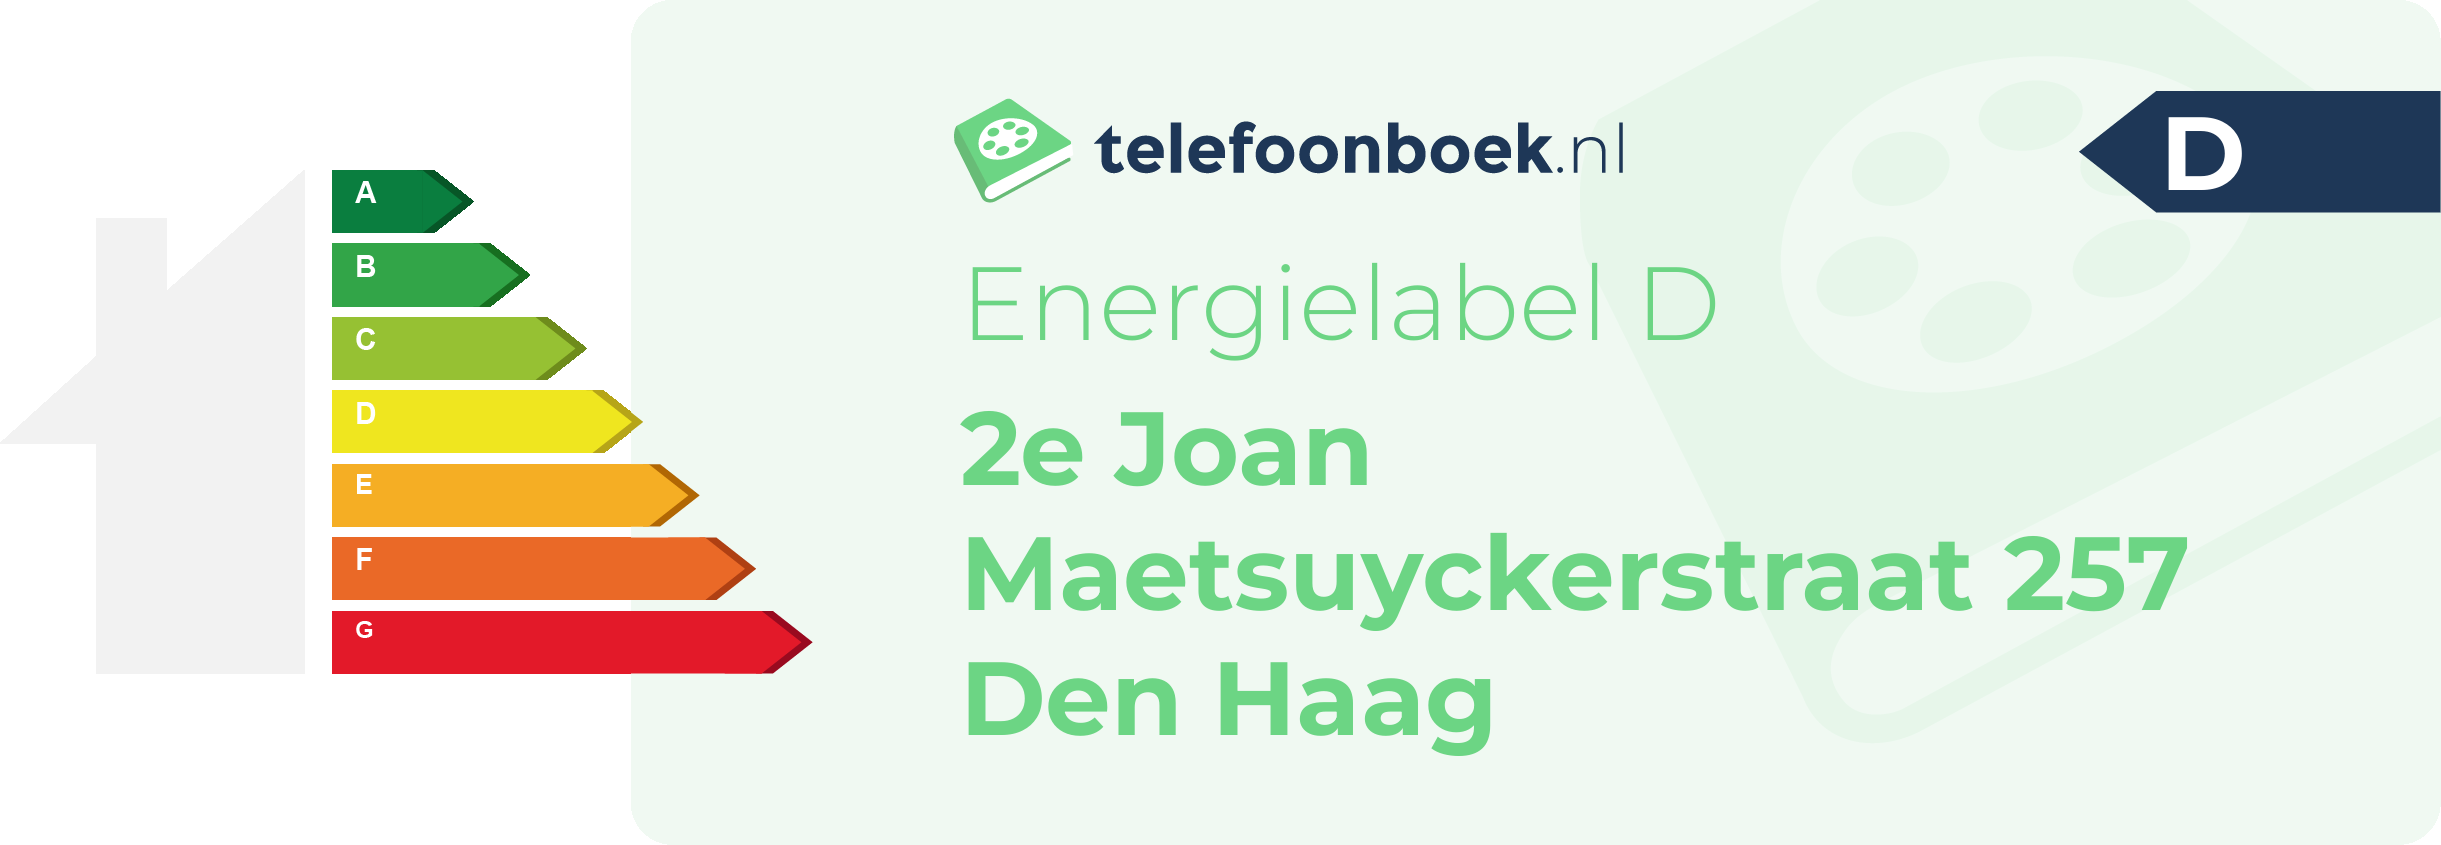 Energielabel 2e Joan Maetsuyckerstraat 257 Den Haag